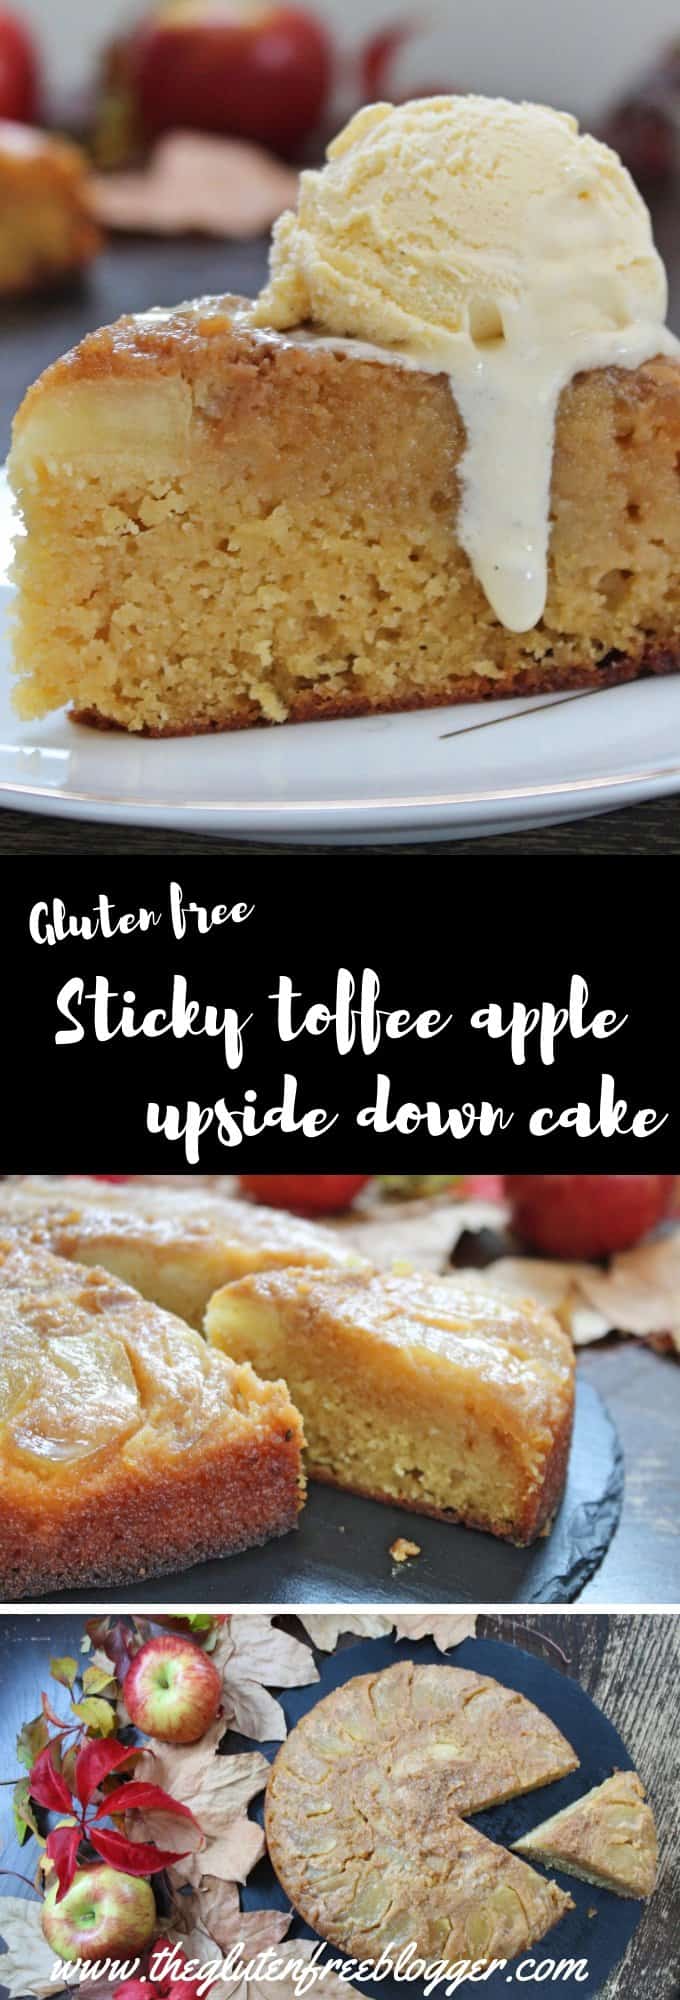 gluten free dessert - toffee apple cake - apple upside down cake - sticky toffee - gluten free dessert - coeliac